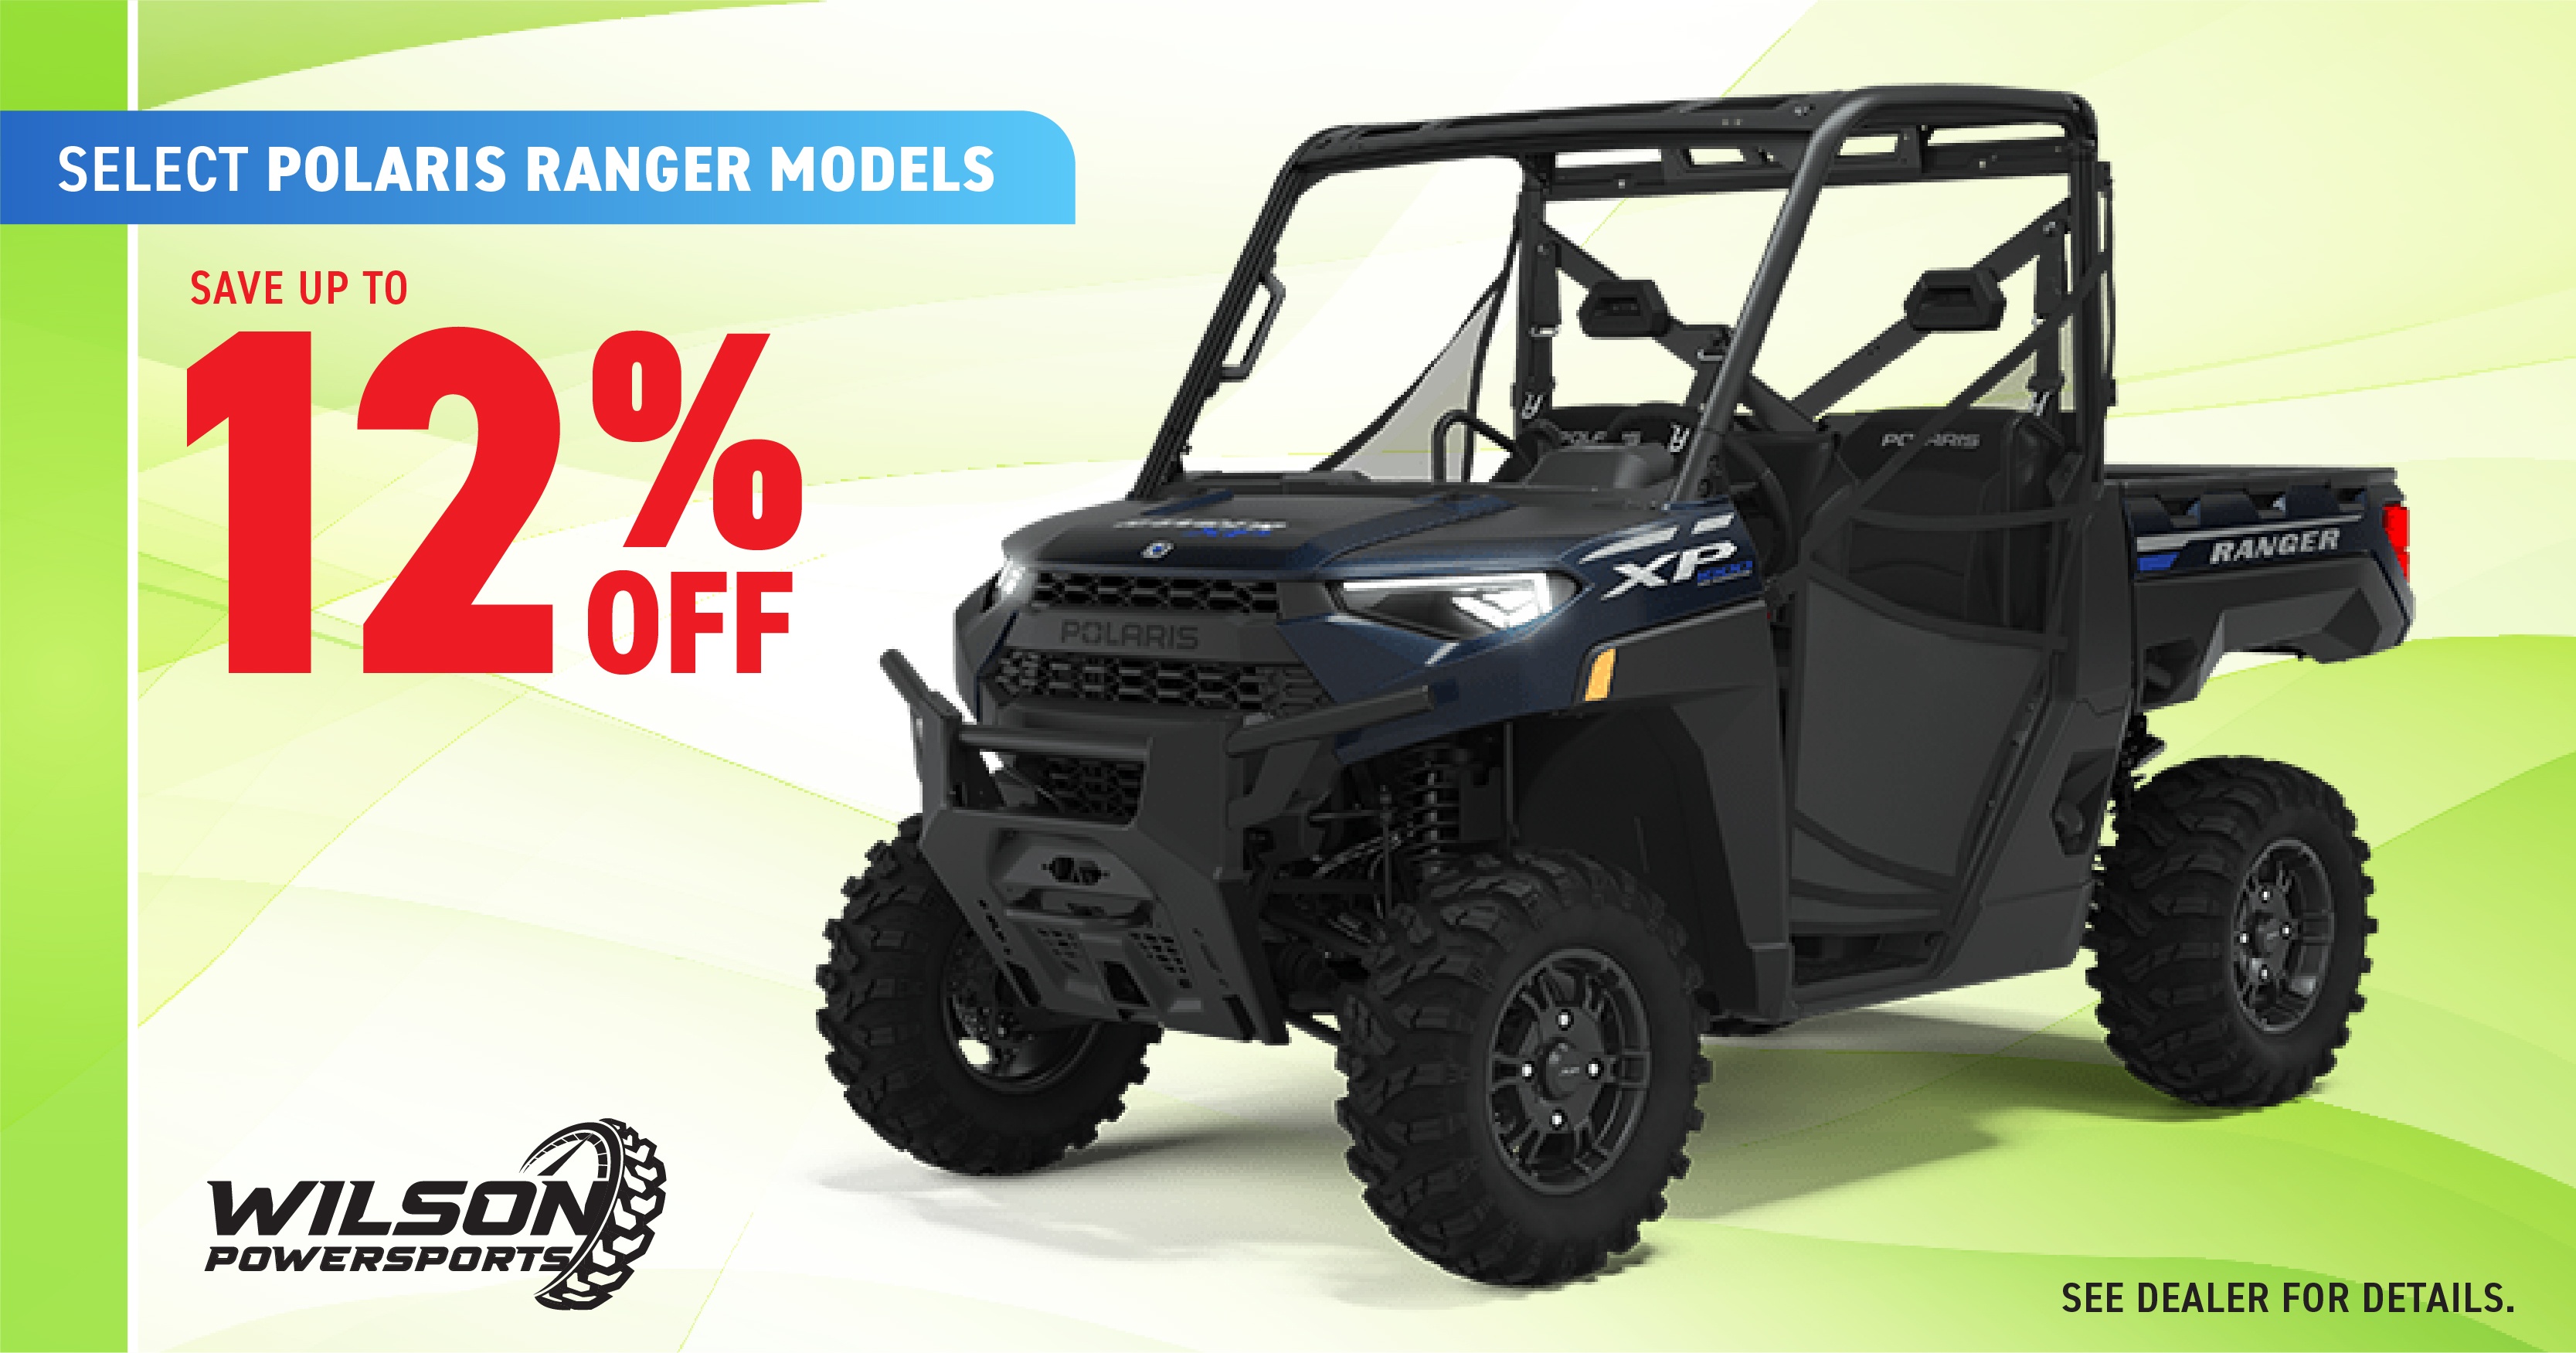 Up to 12% off select Polaris Ranger Models